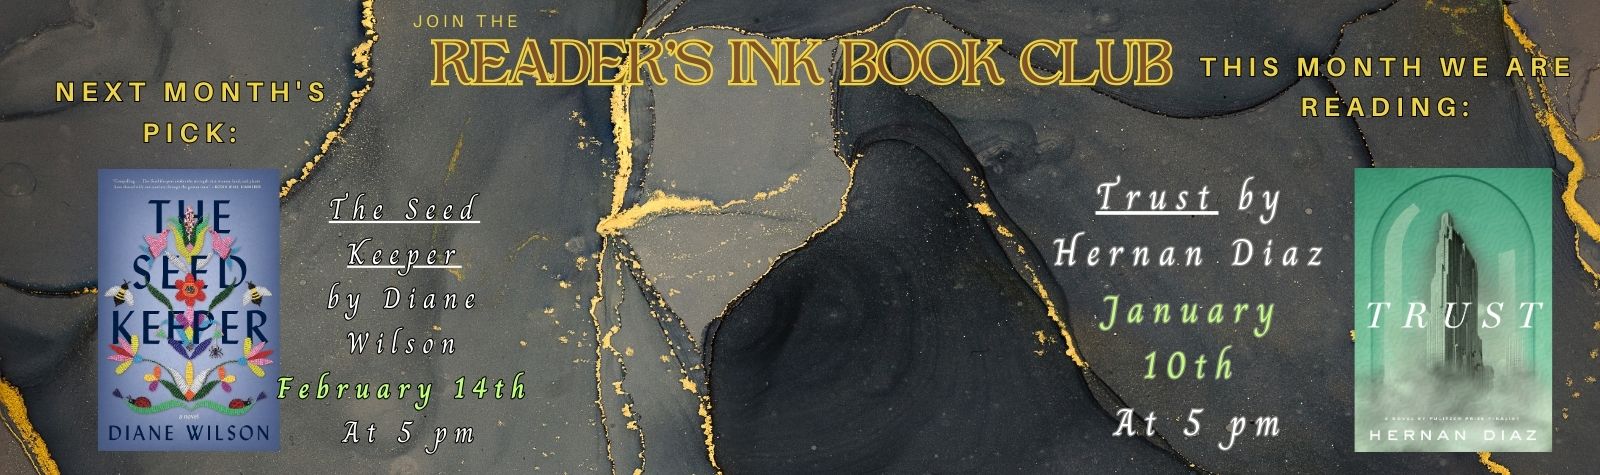 Reader’s Ink Book Club